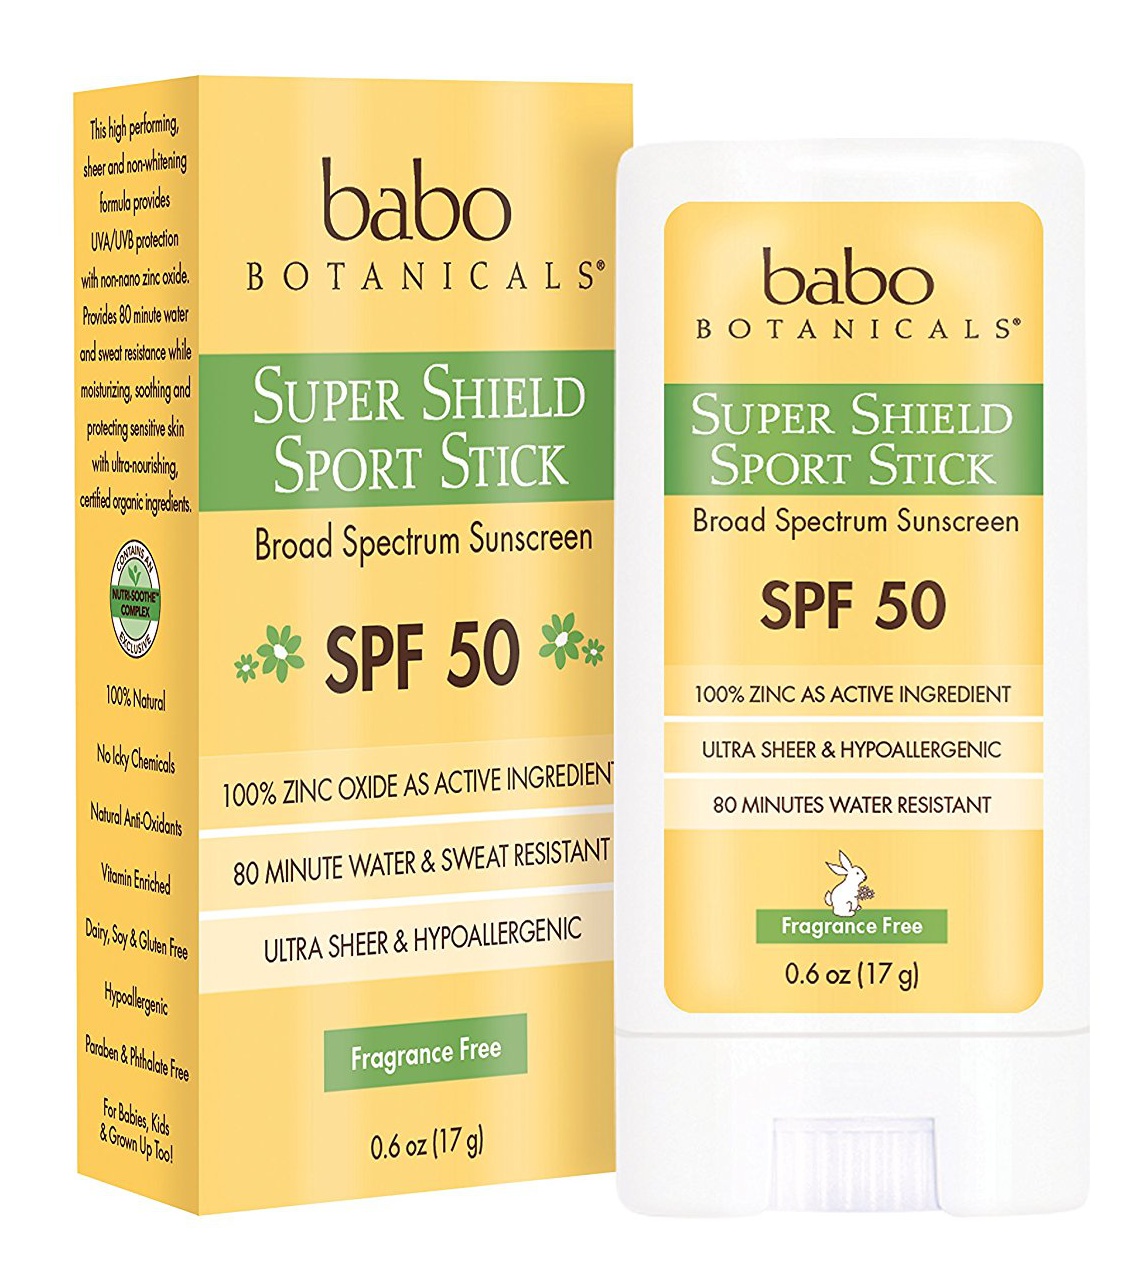 Babo Botanicals Super Shield Non-Nano Zinc SPF 50 Fragrance Free Mineral Sunscreen